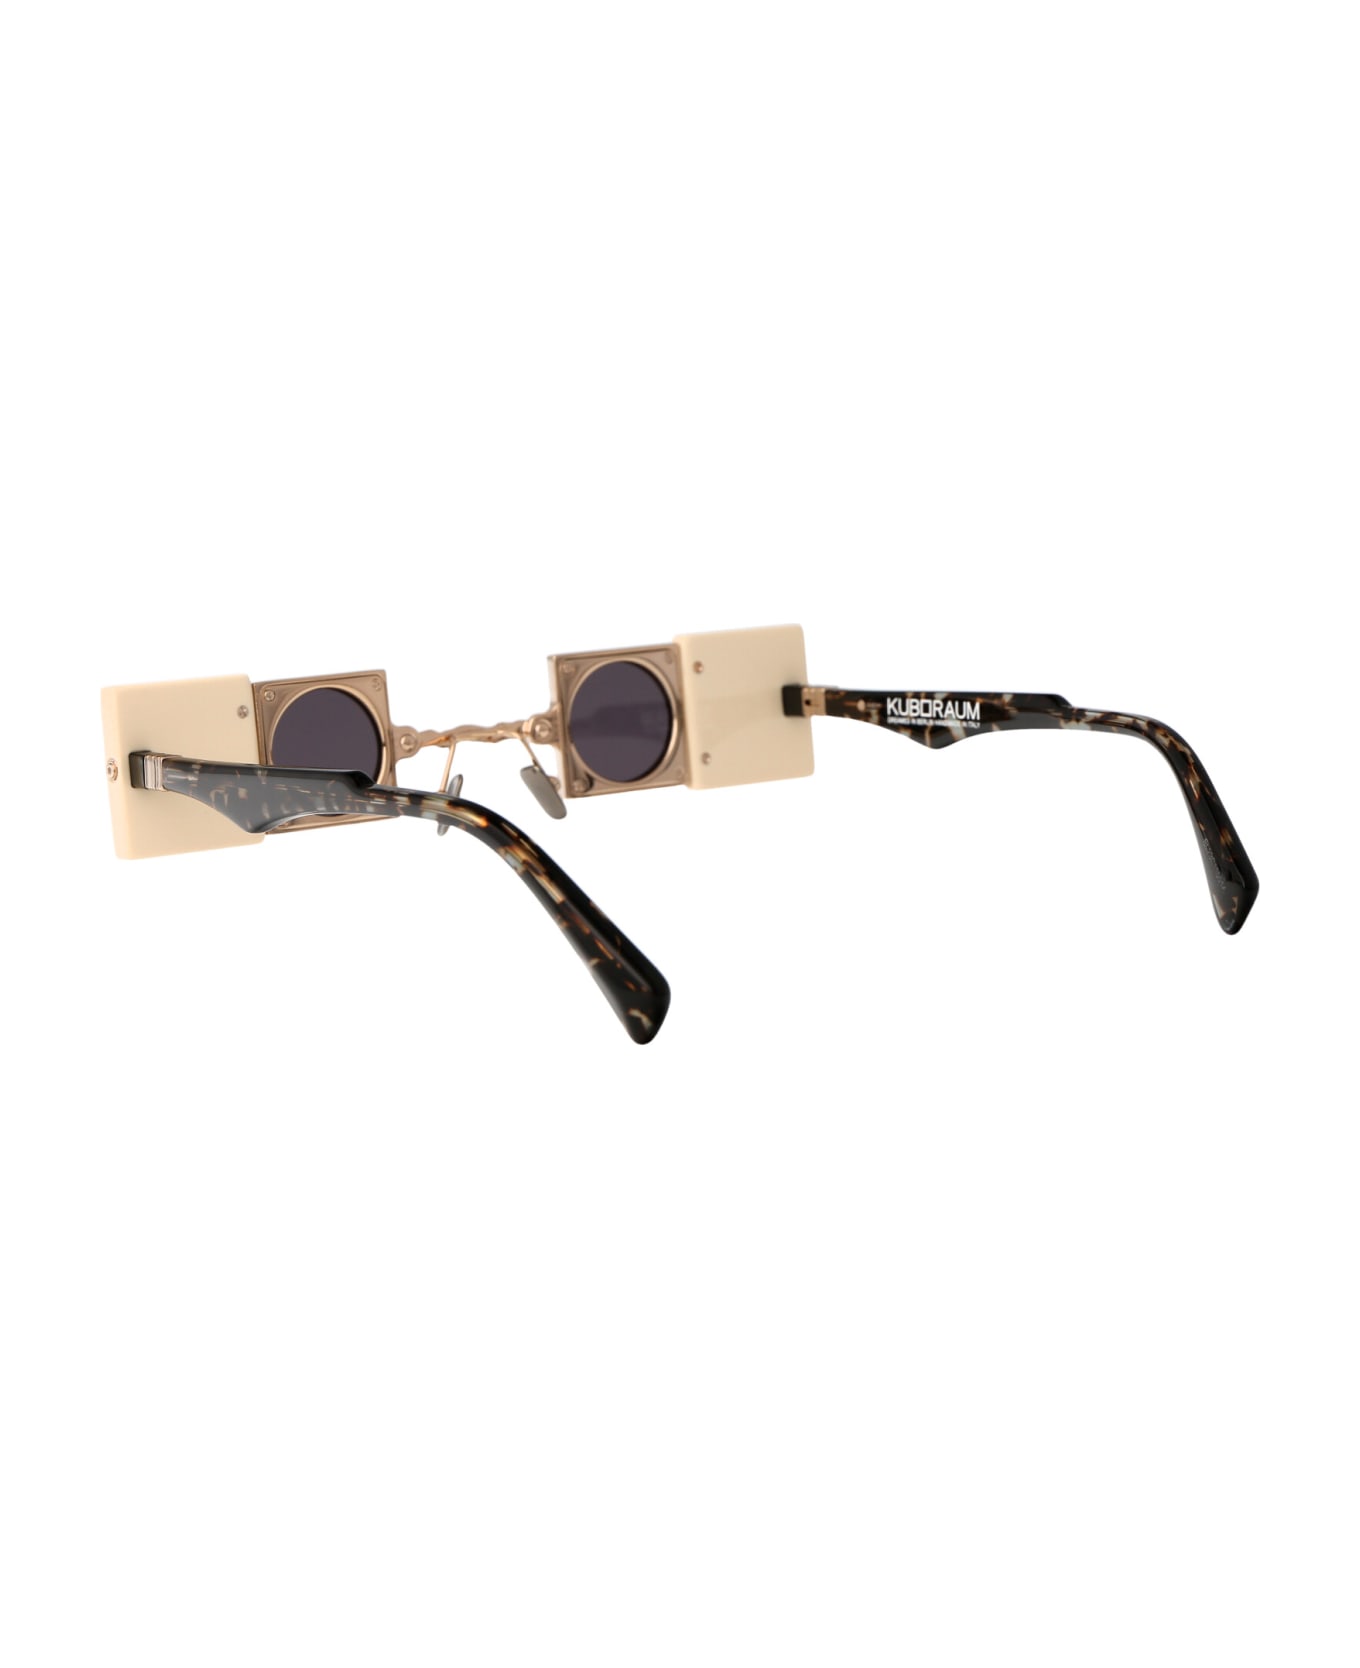 Kuboraum Maske Q50 Sunglasses - PG IY 2GREY